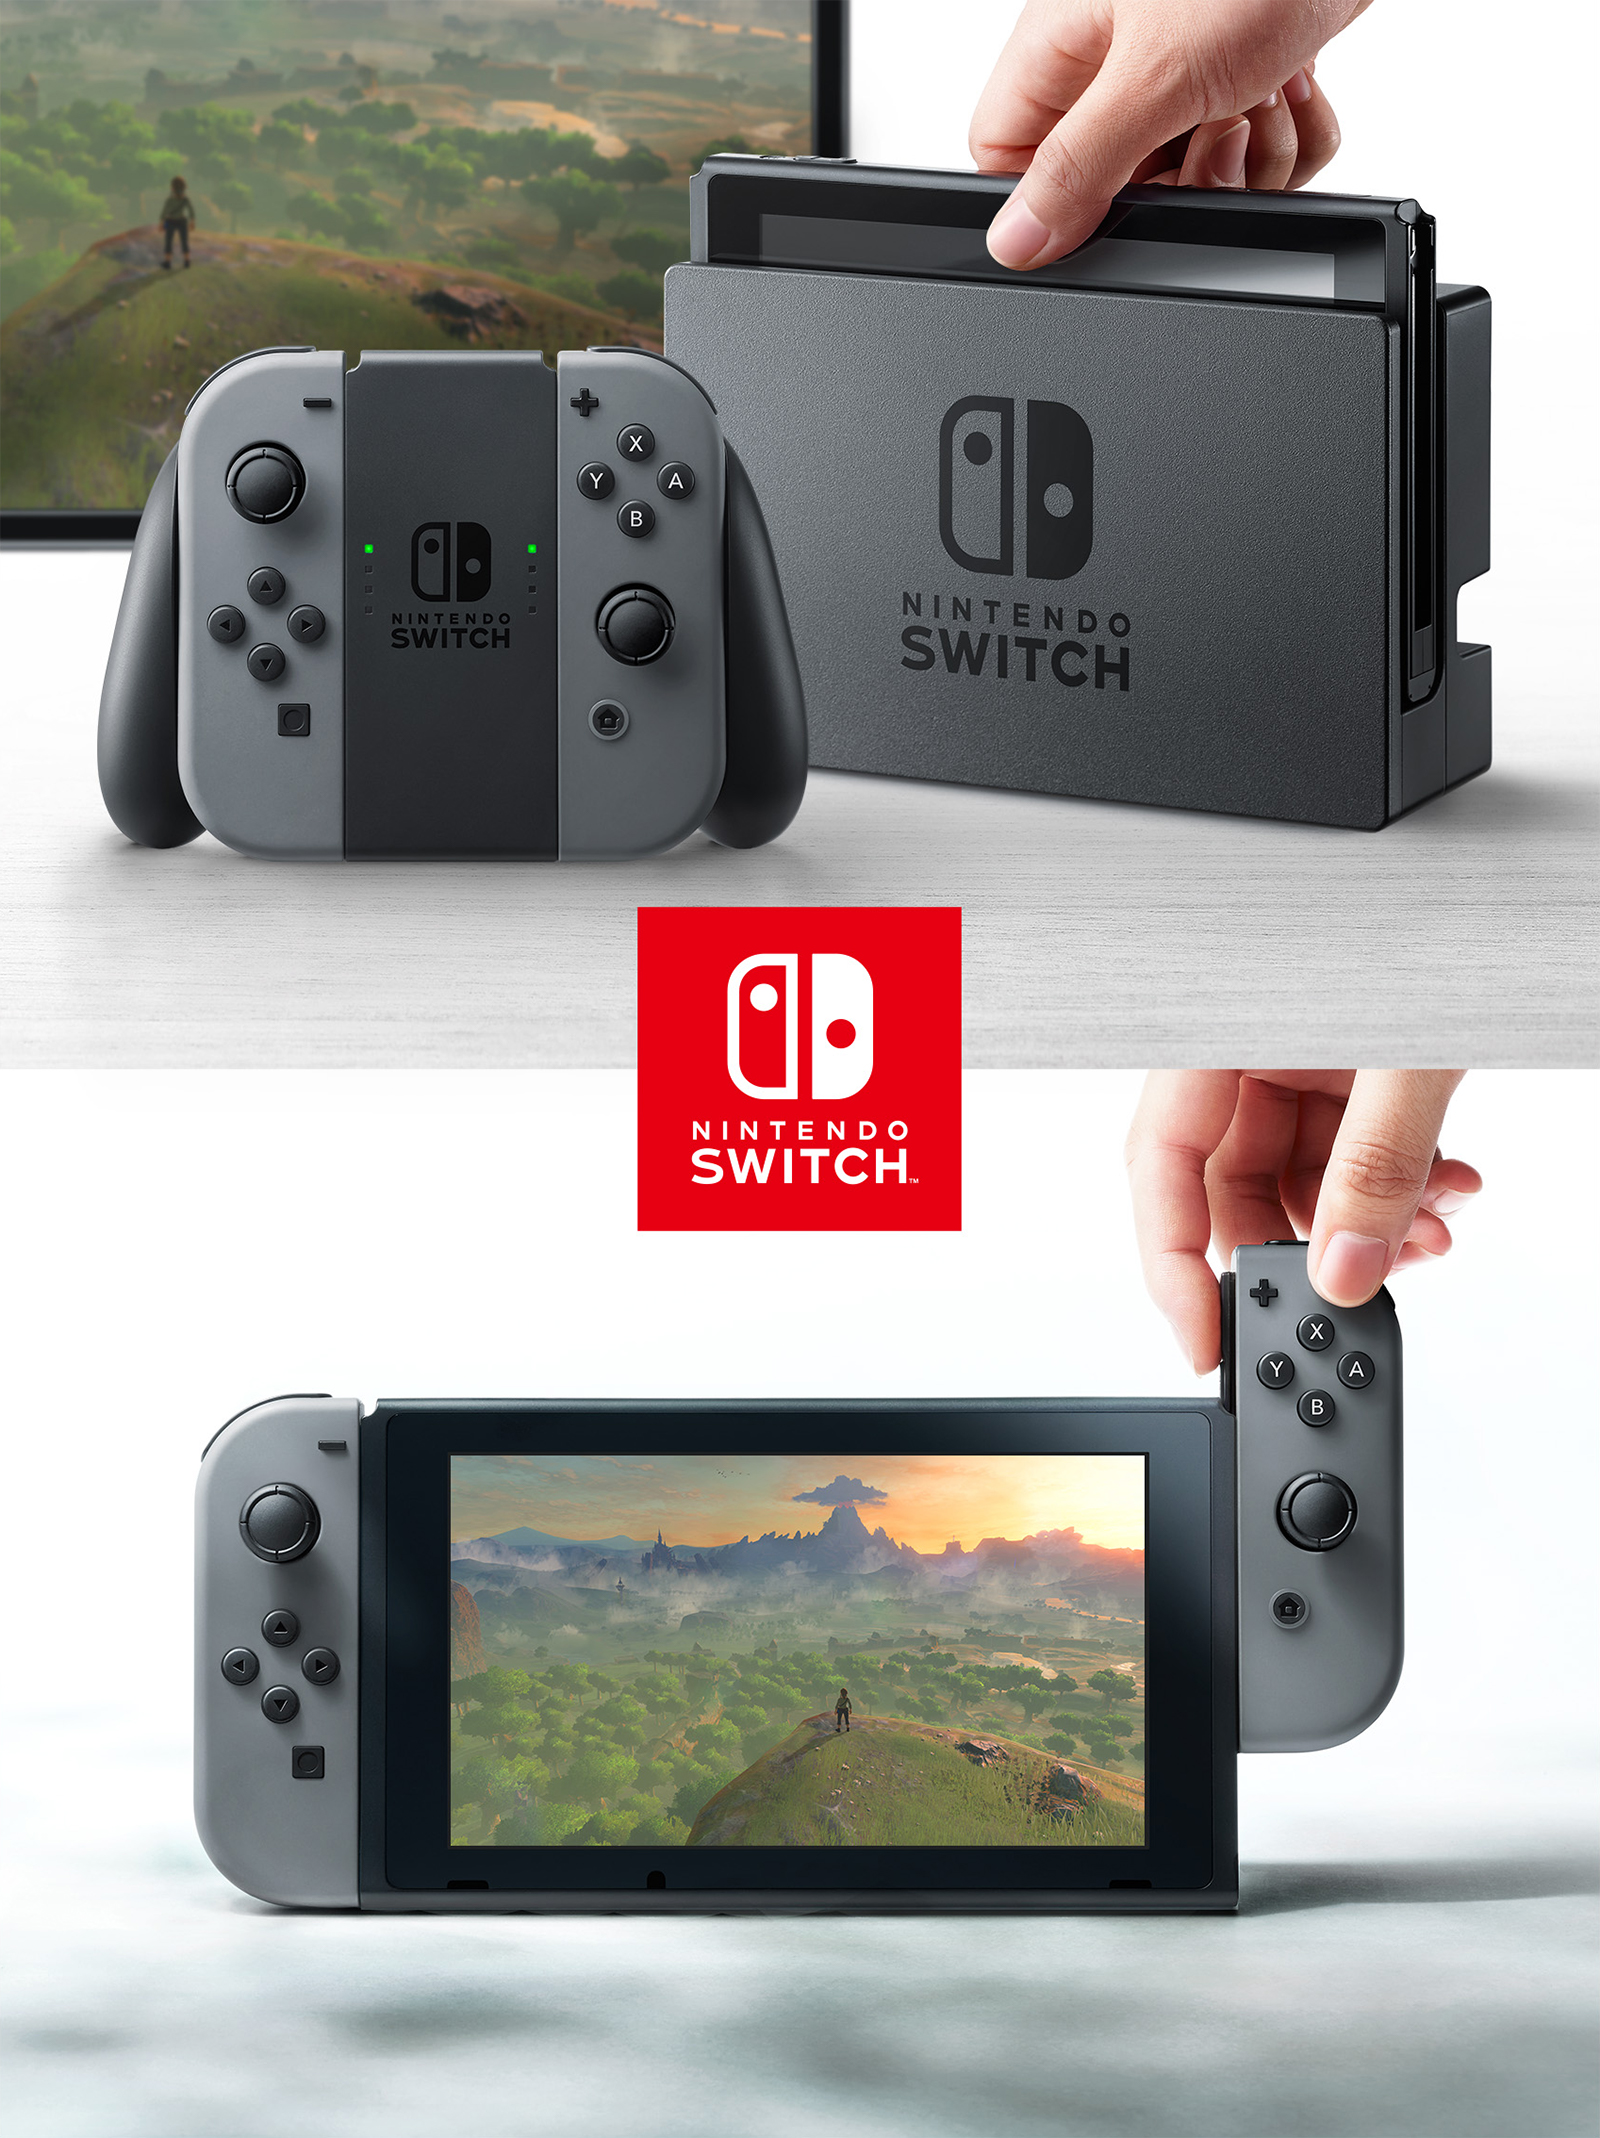 Nintendo Switch revealed! : r/gaming